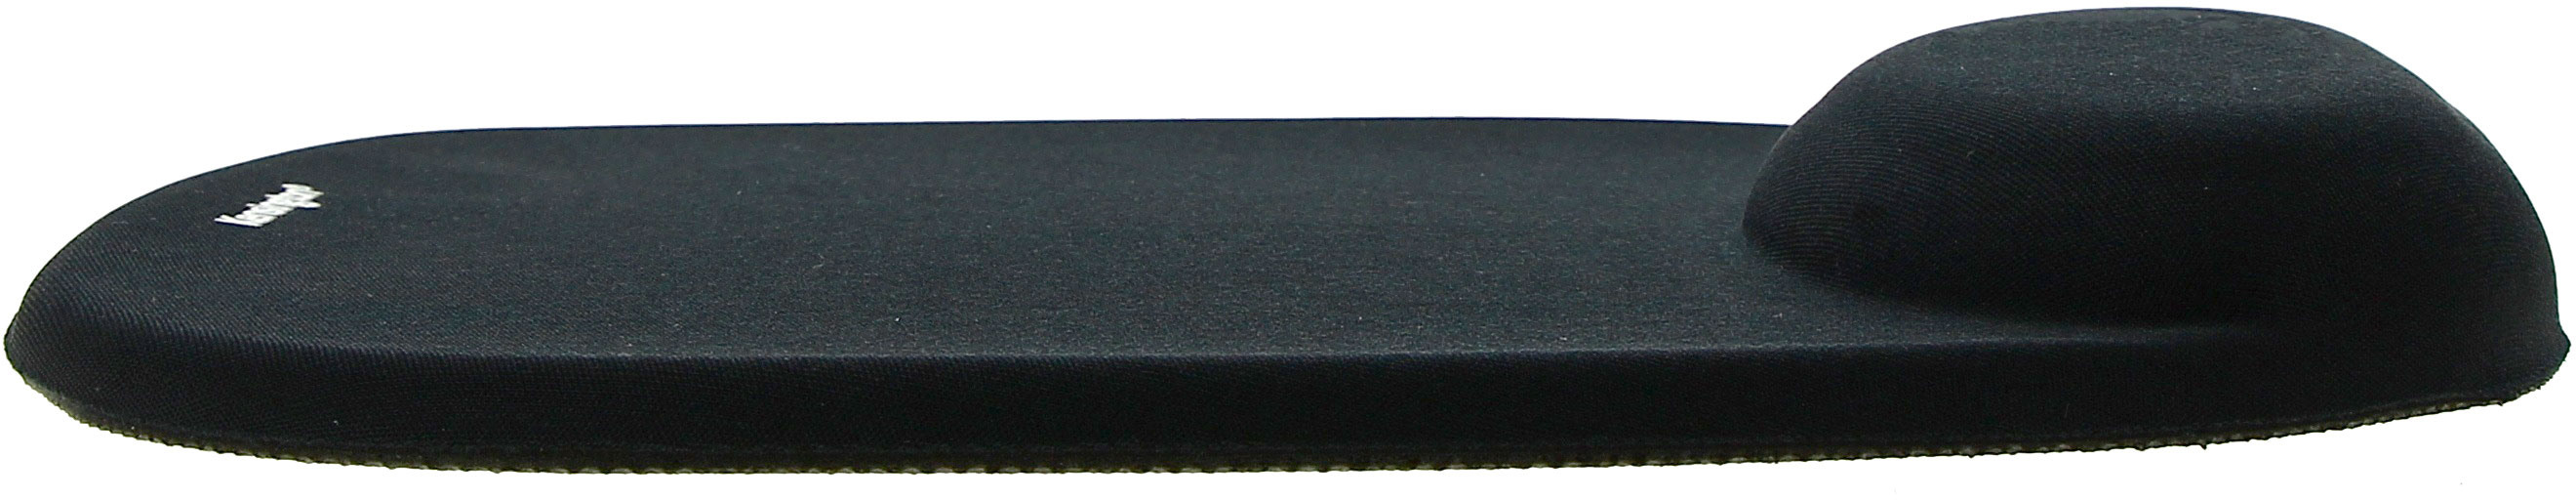 KENSINGTON Schaumstoff-Mousepad 62384 with wirst rest blk